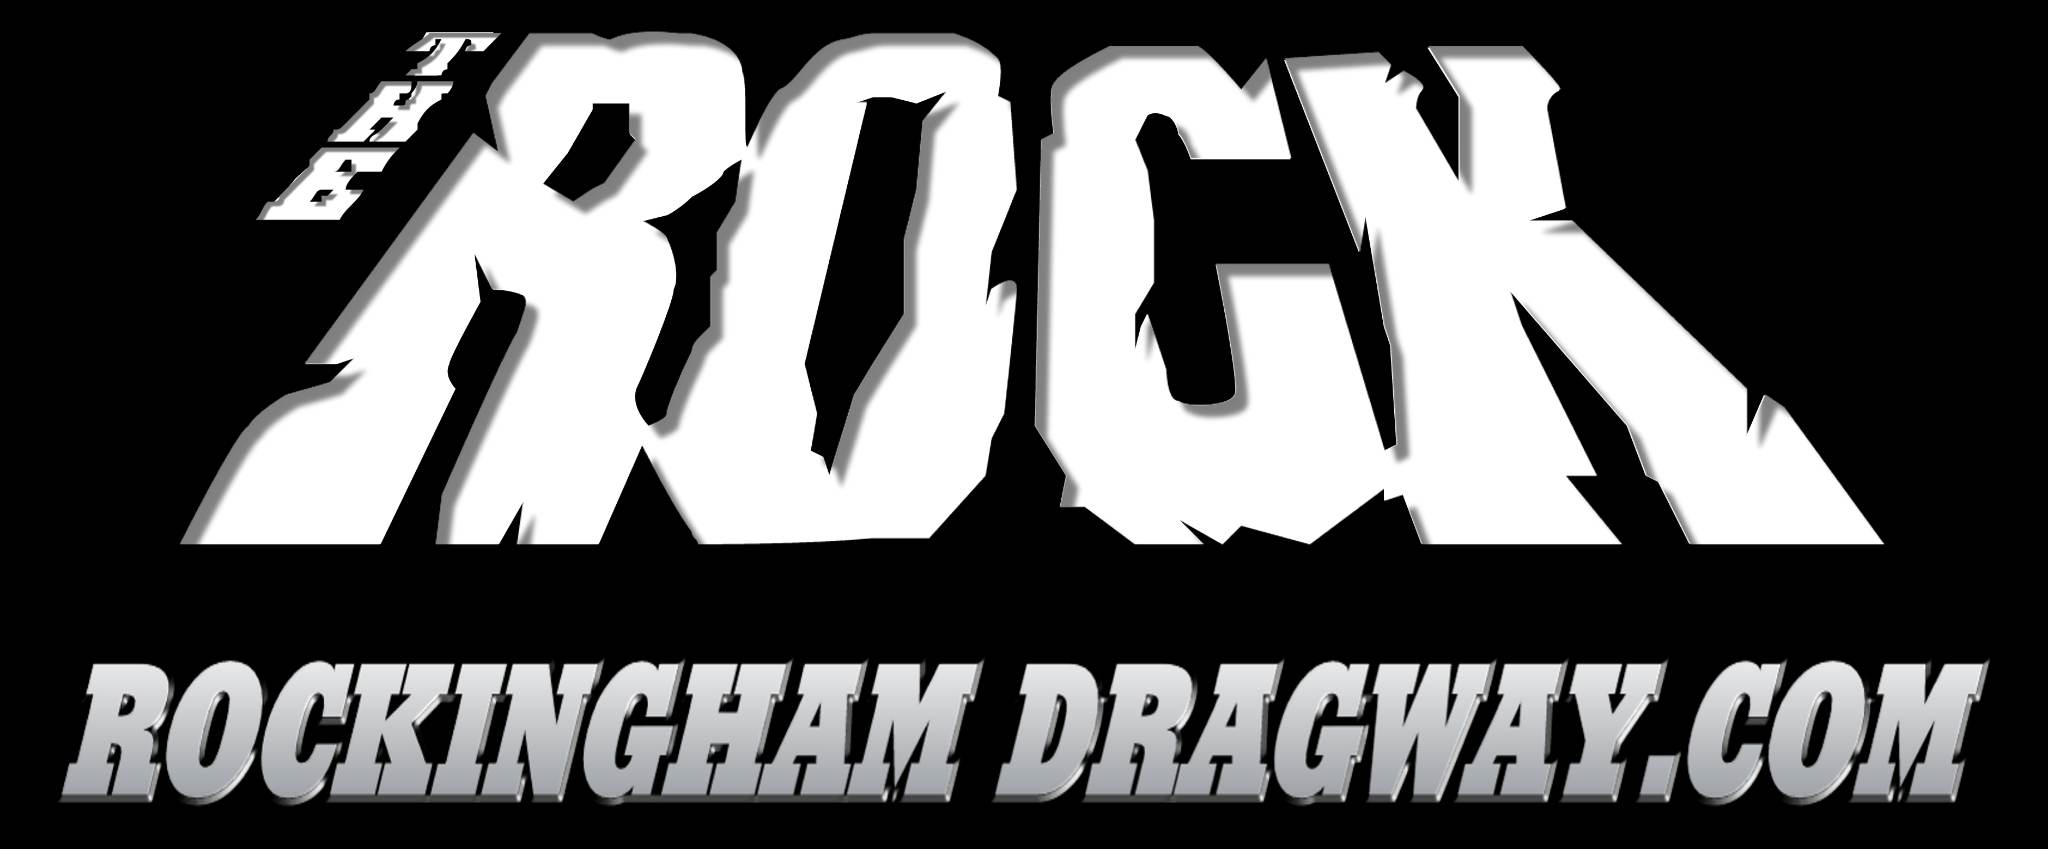 Rockingham Dragway